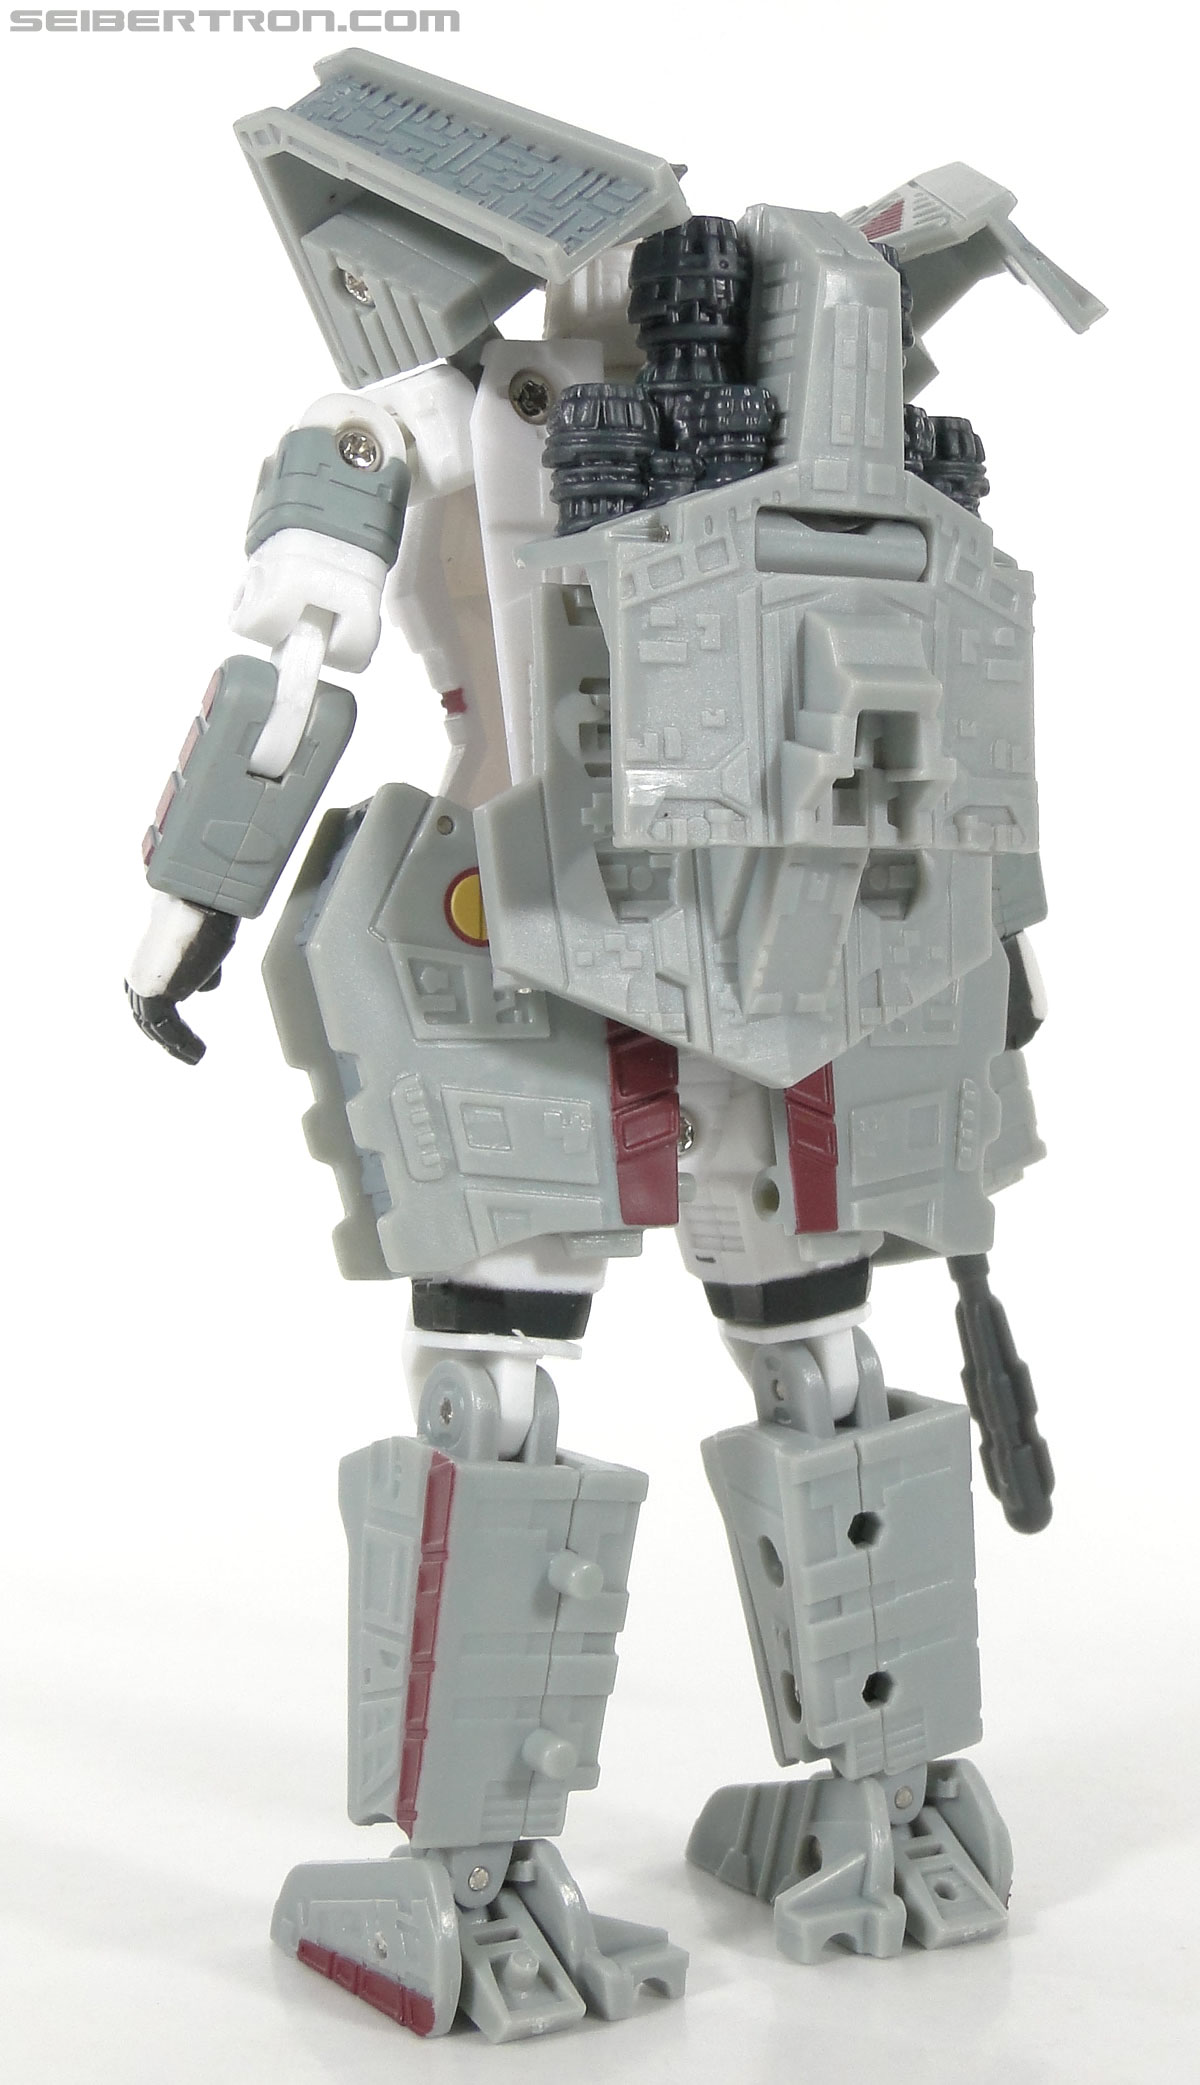 Star Wars Transformers Lieutenant Thire (Republic Attack Cruiser) (Image #53 of 76)